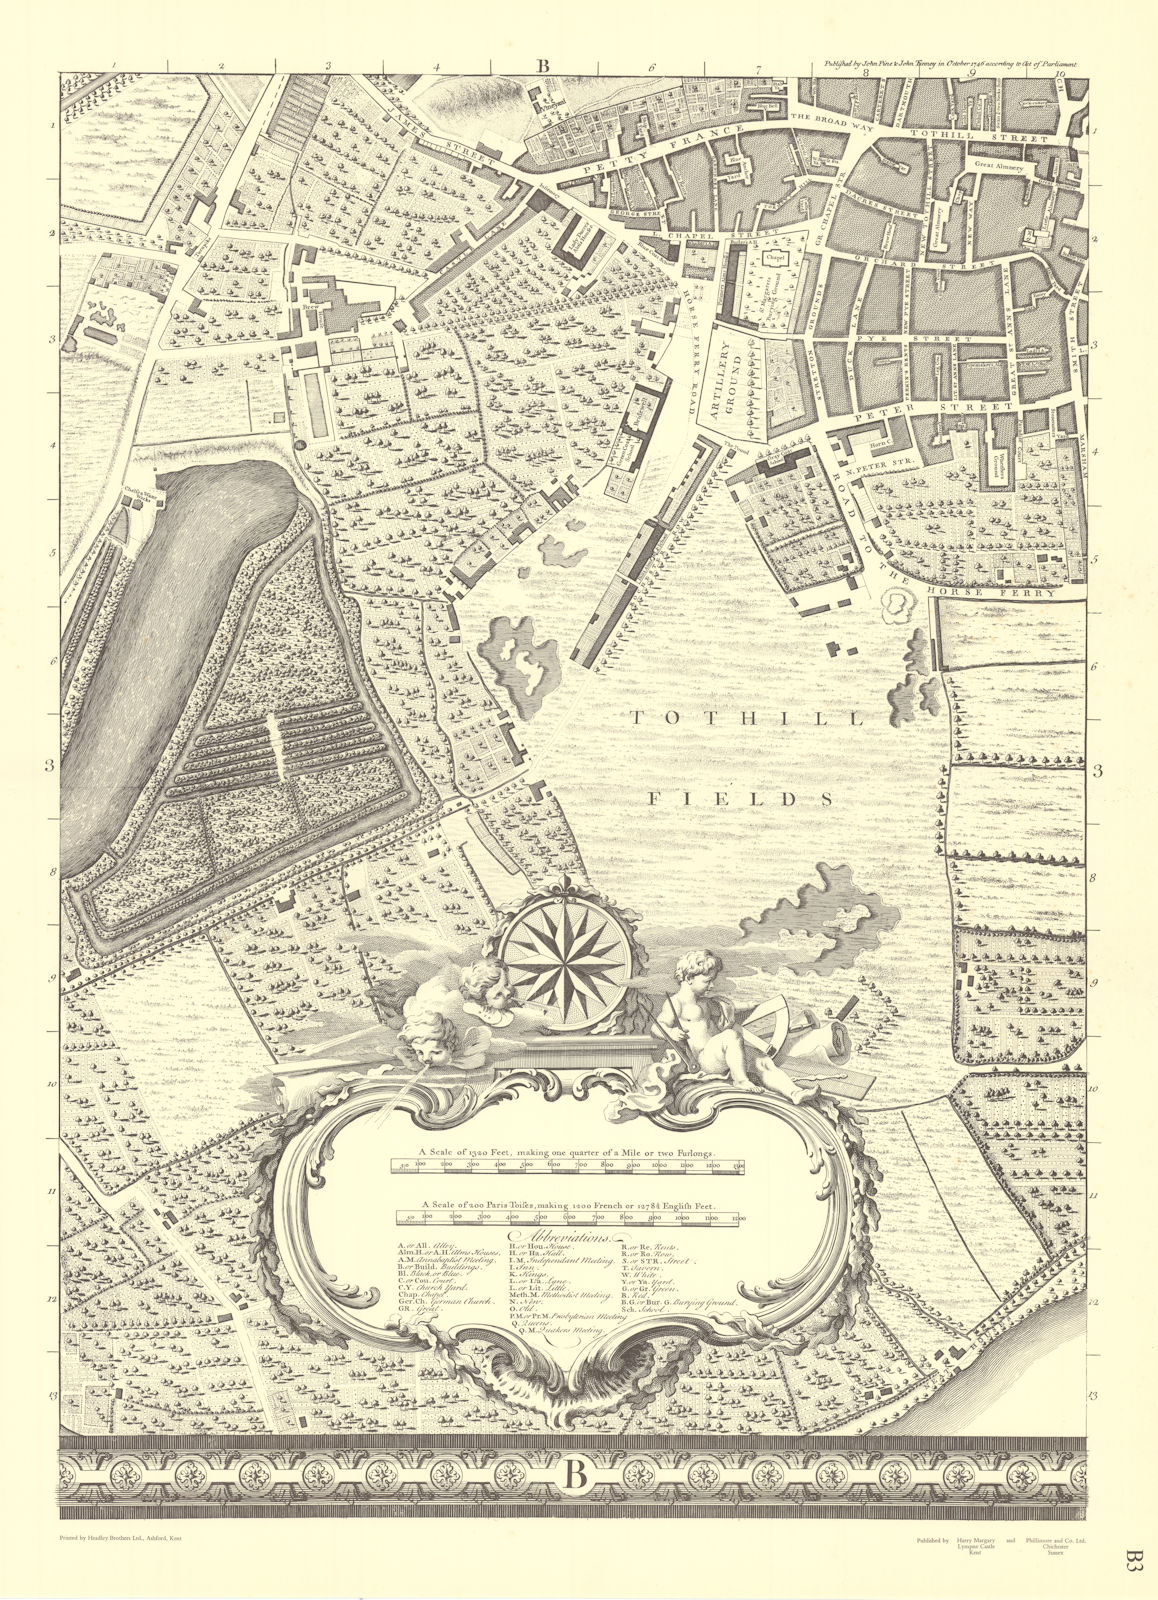 Victoria Westminster Pimlico Grosvenor Basin. B3. After ROCQUE 1971 (1746) map